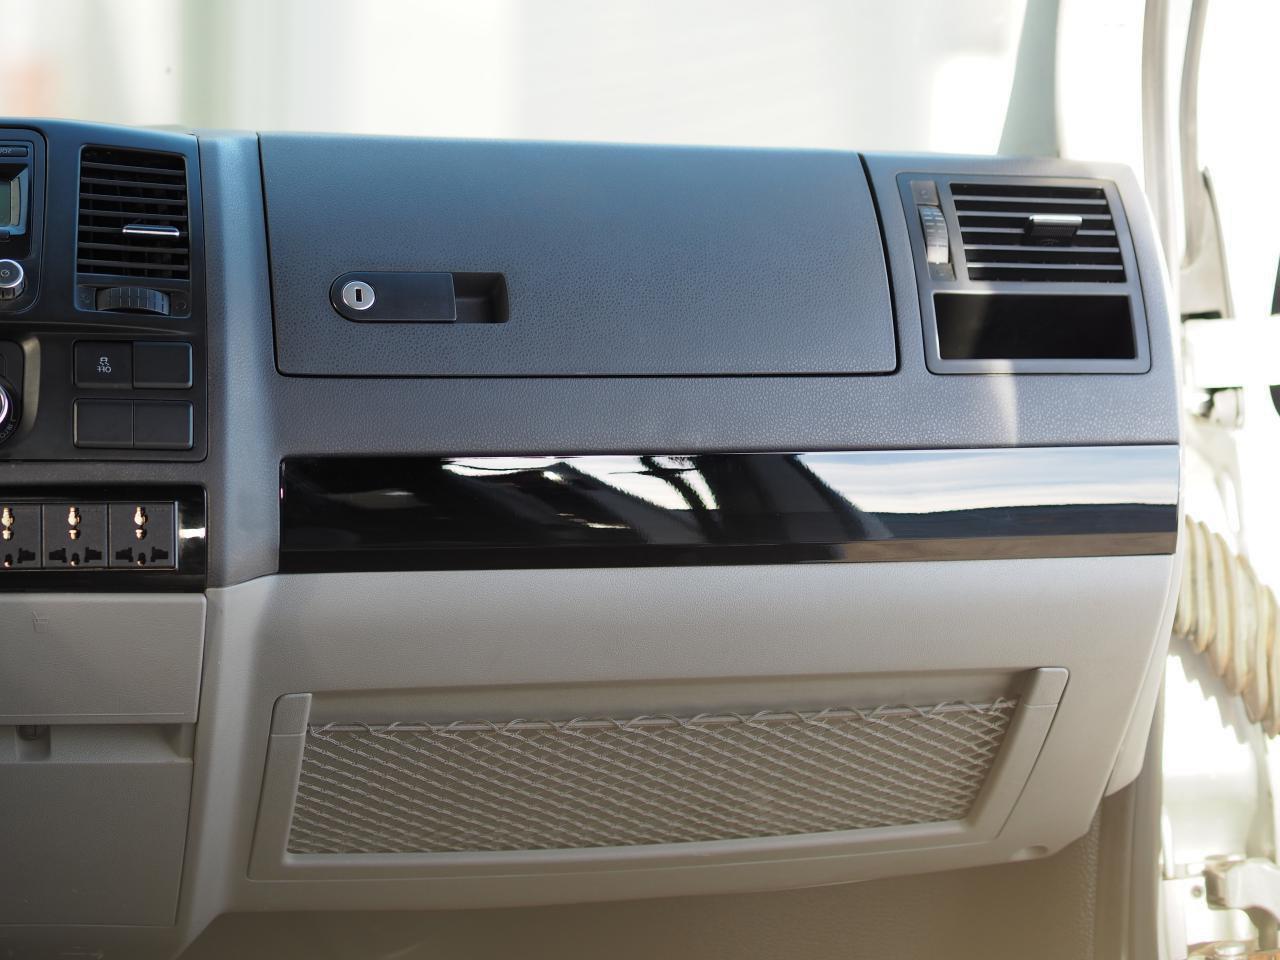 VW T5 Comfort Dash Interior Full Styling Kit